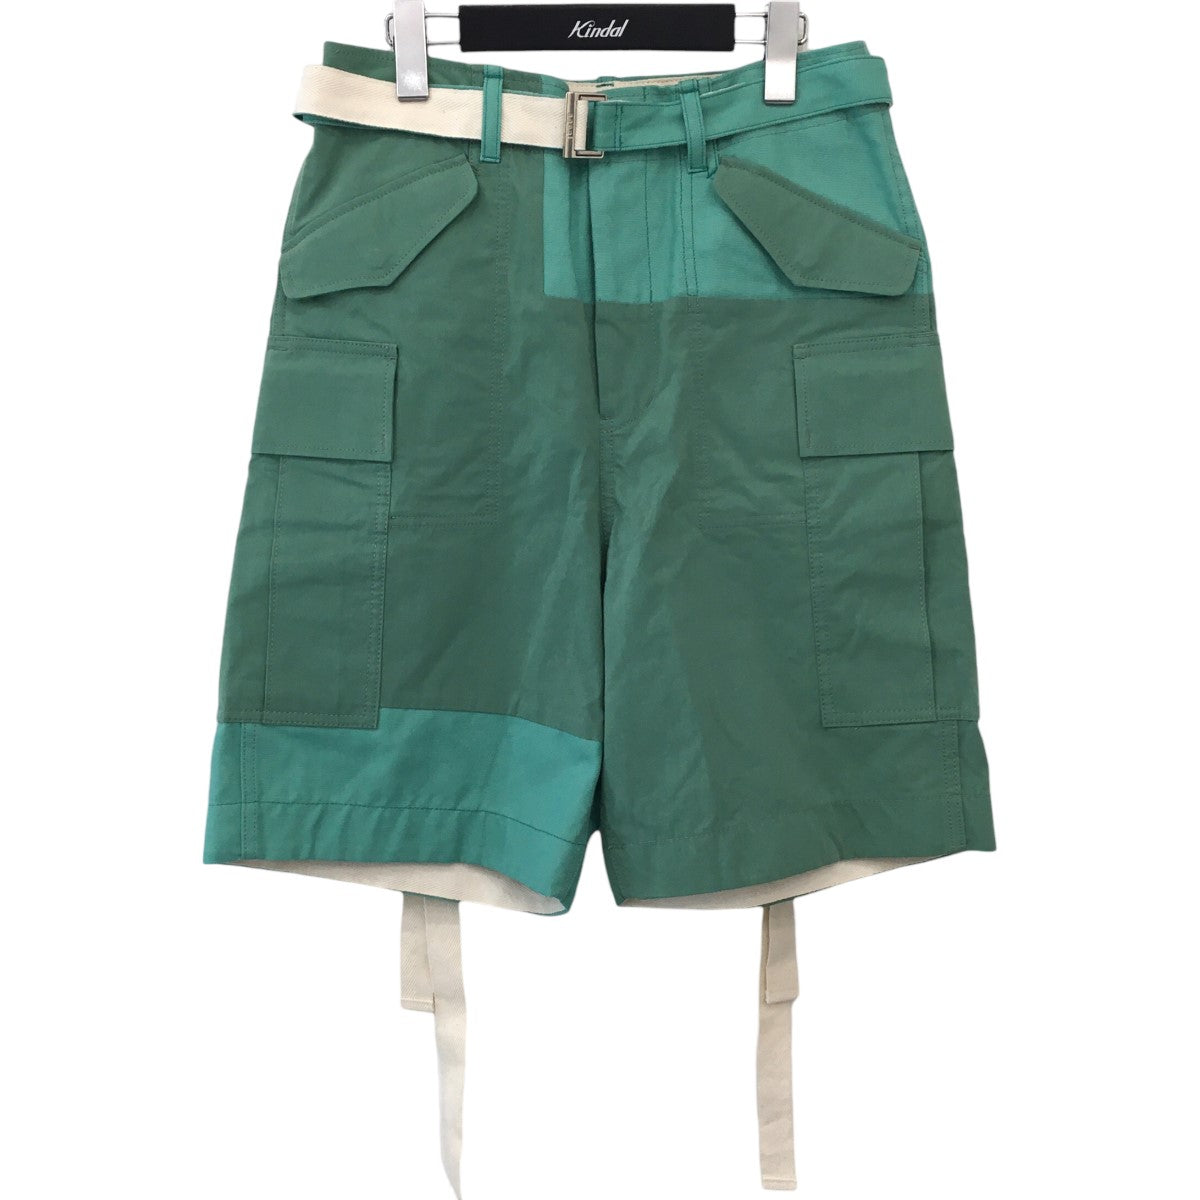 sacai(サカイ) 2021SS 「Cotton Nylon Oxford Shorts」 21-02506M 